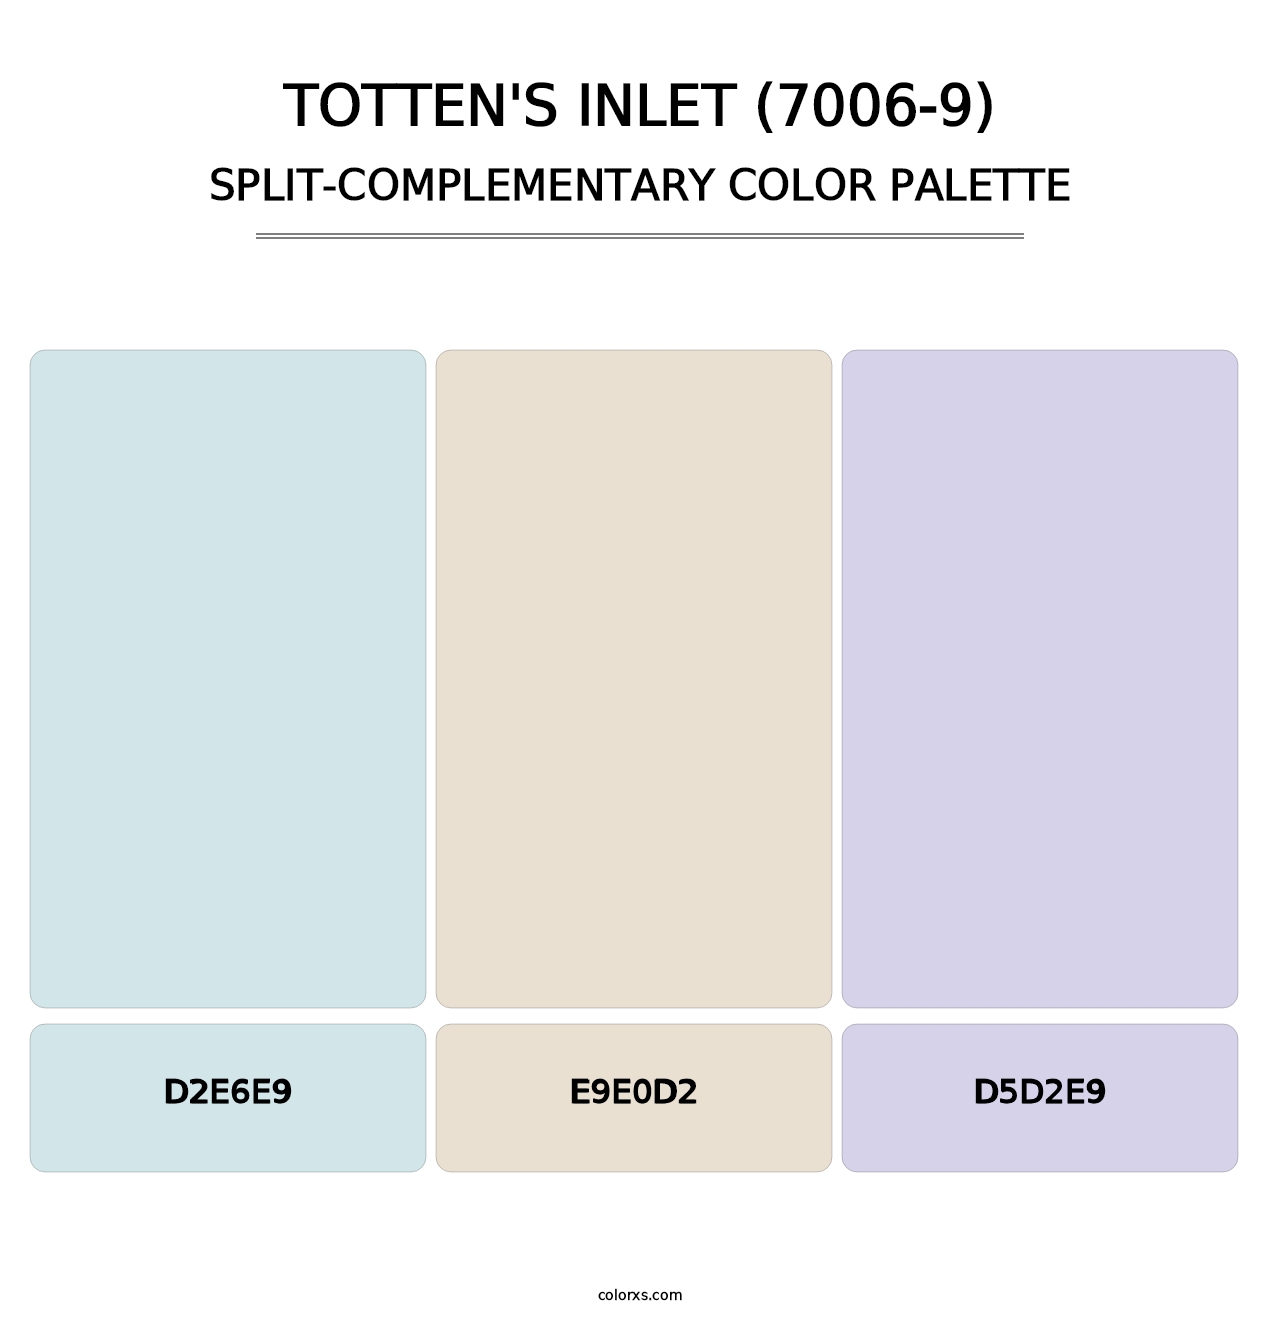 Totten's Inlet (7006-9) - Split-Complementary Color Palette